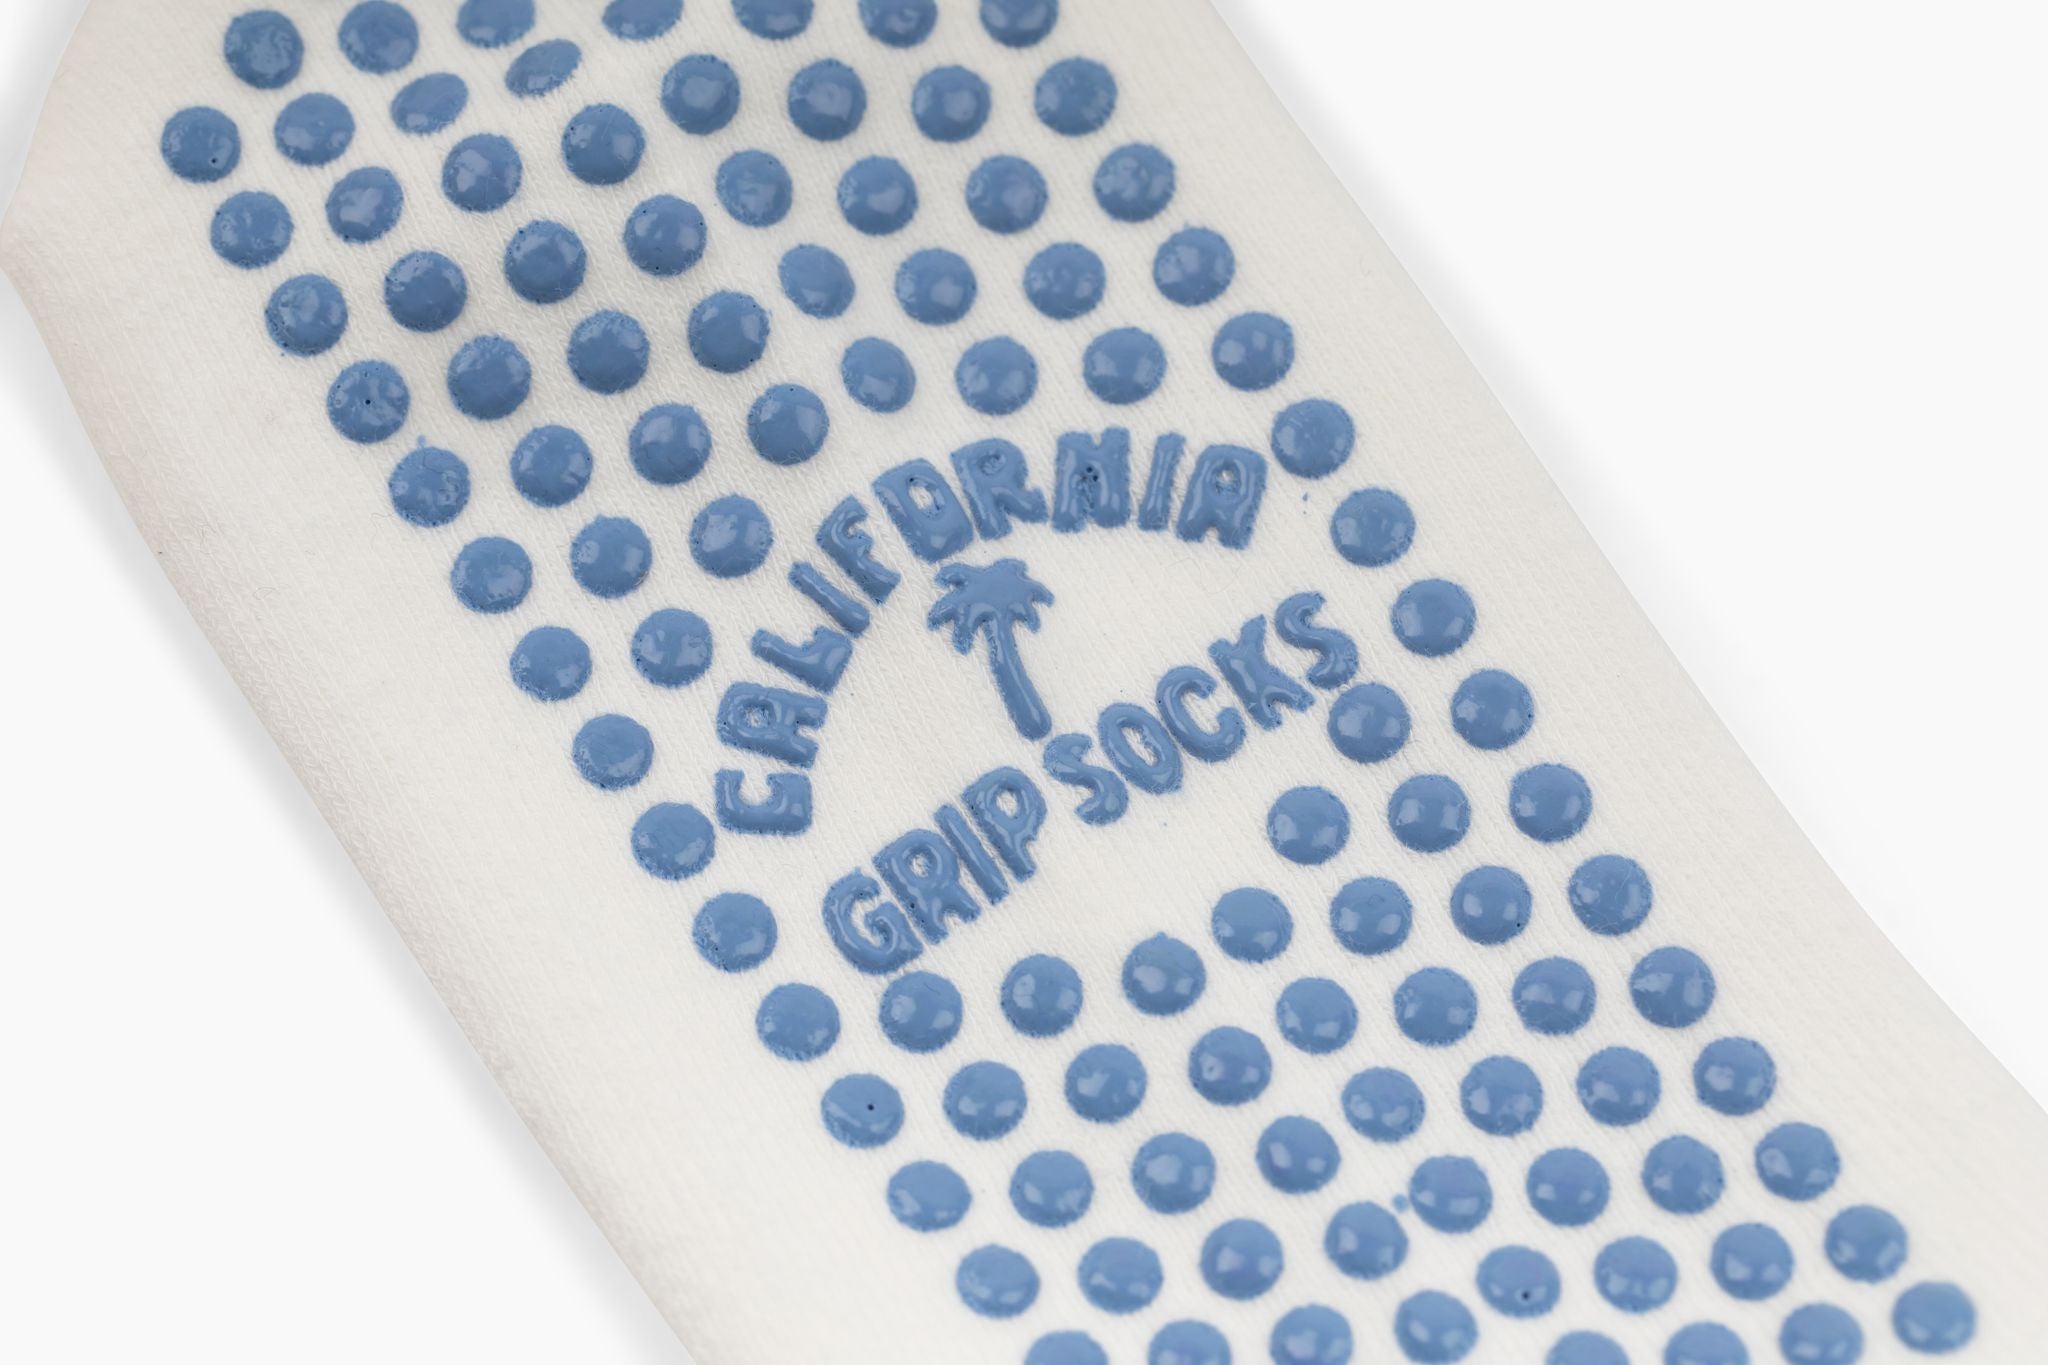 The Cherry Sock  California Grip Socks